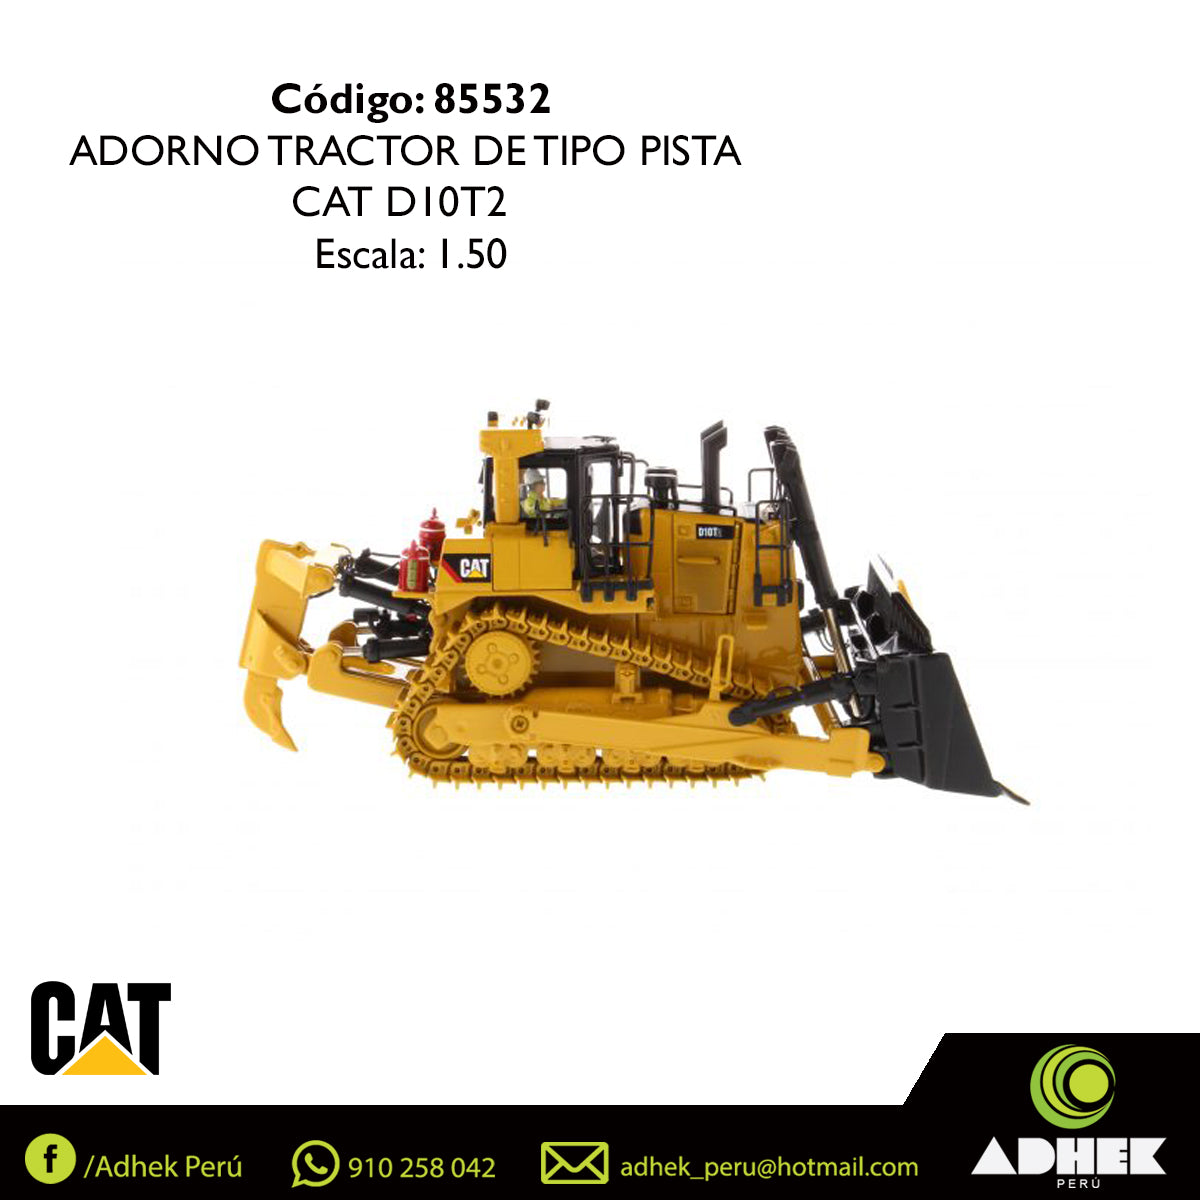 ADORNO TRACTOR DE CADENAS D10T2 1:50 CAT DM-85532 DIECAST MASTER